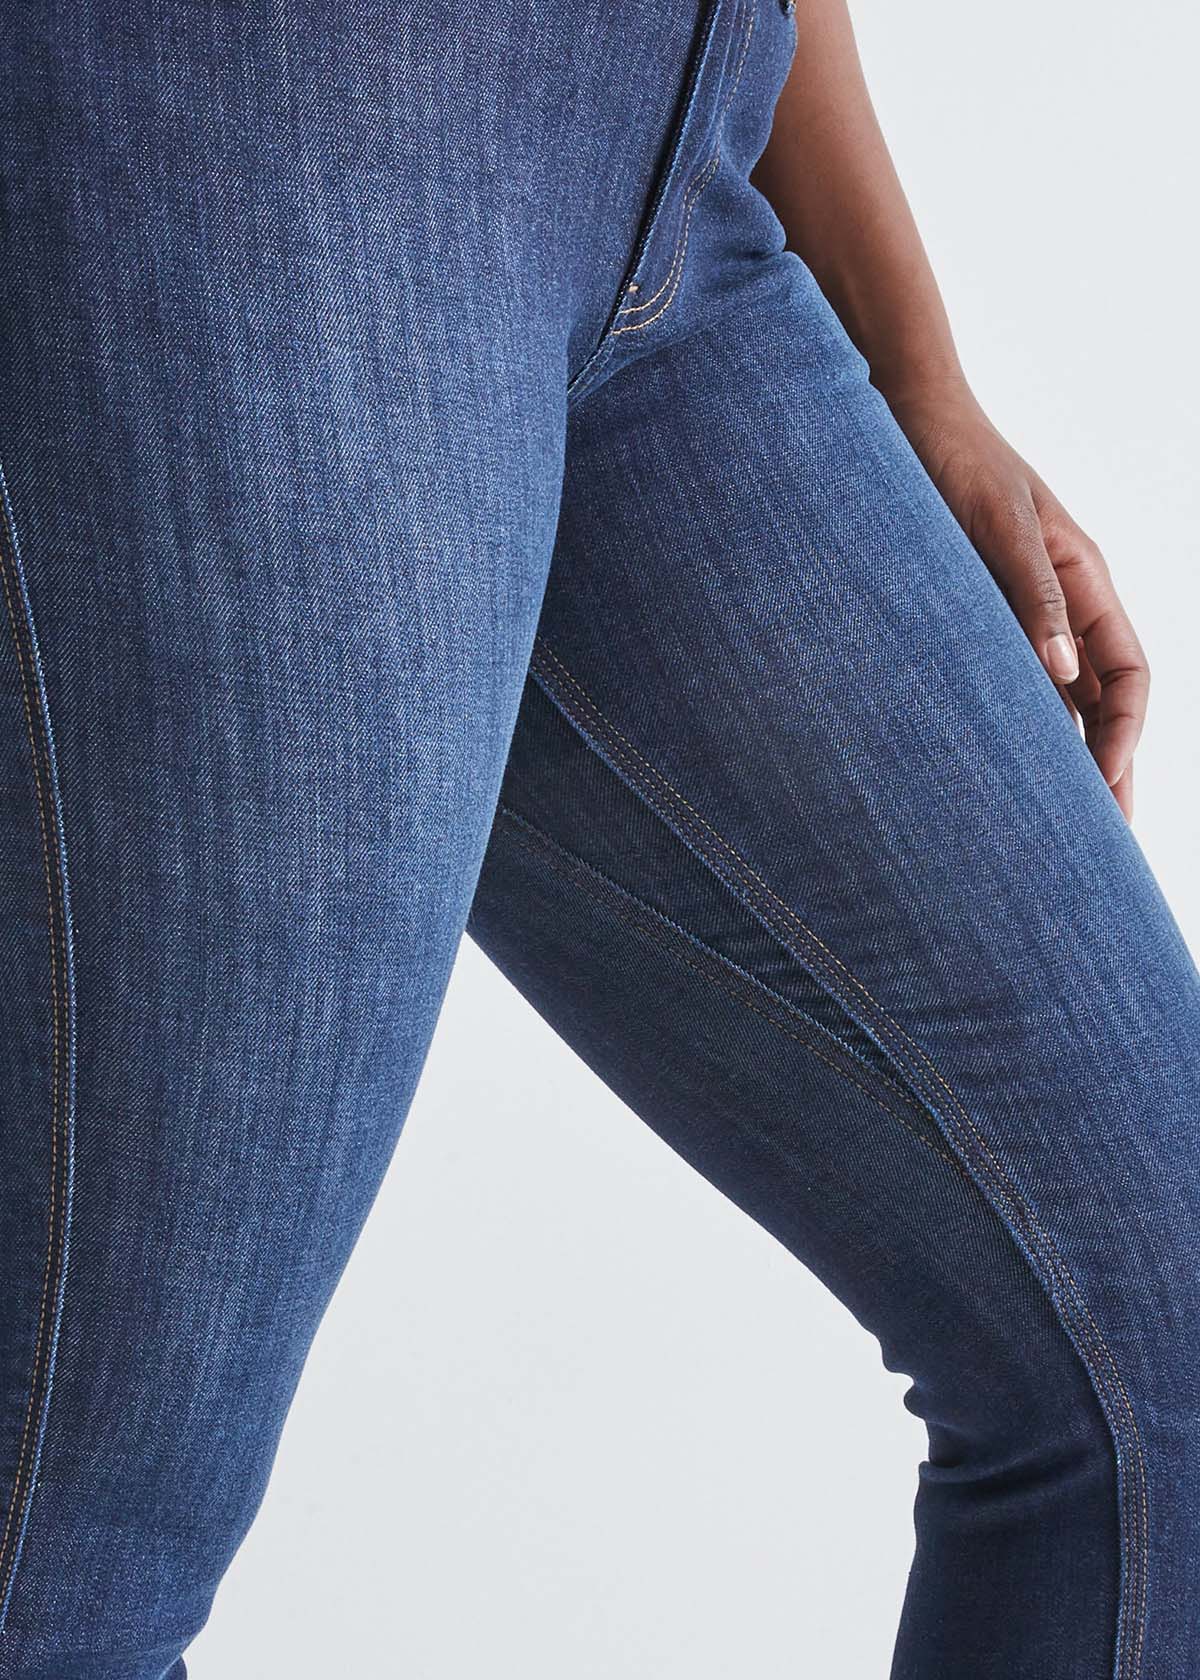 Women's Slim Straight dark blue stretch jeans gusset